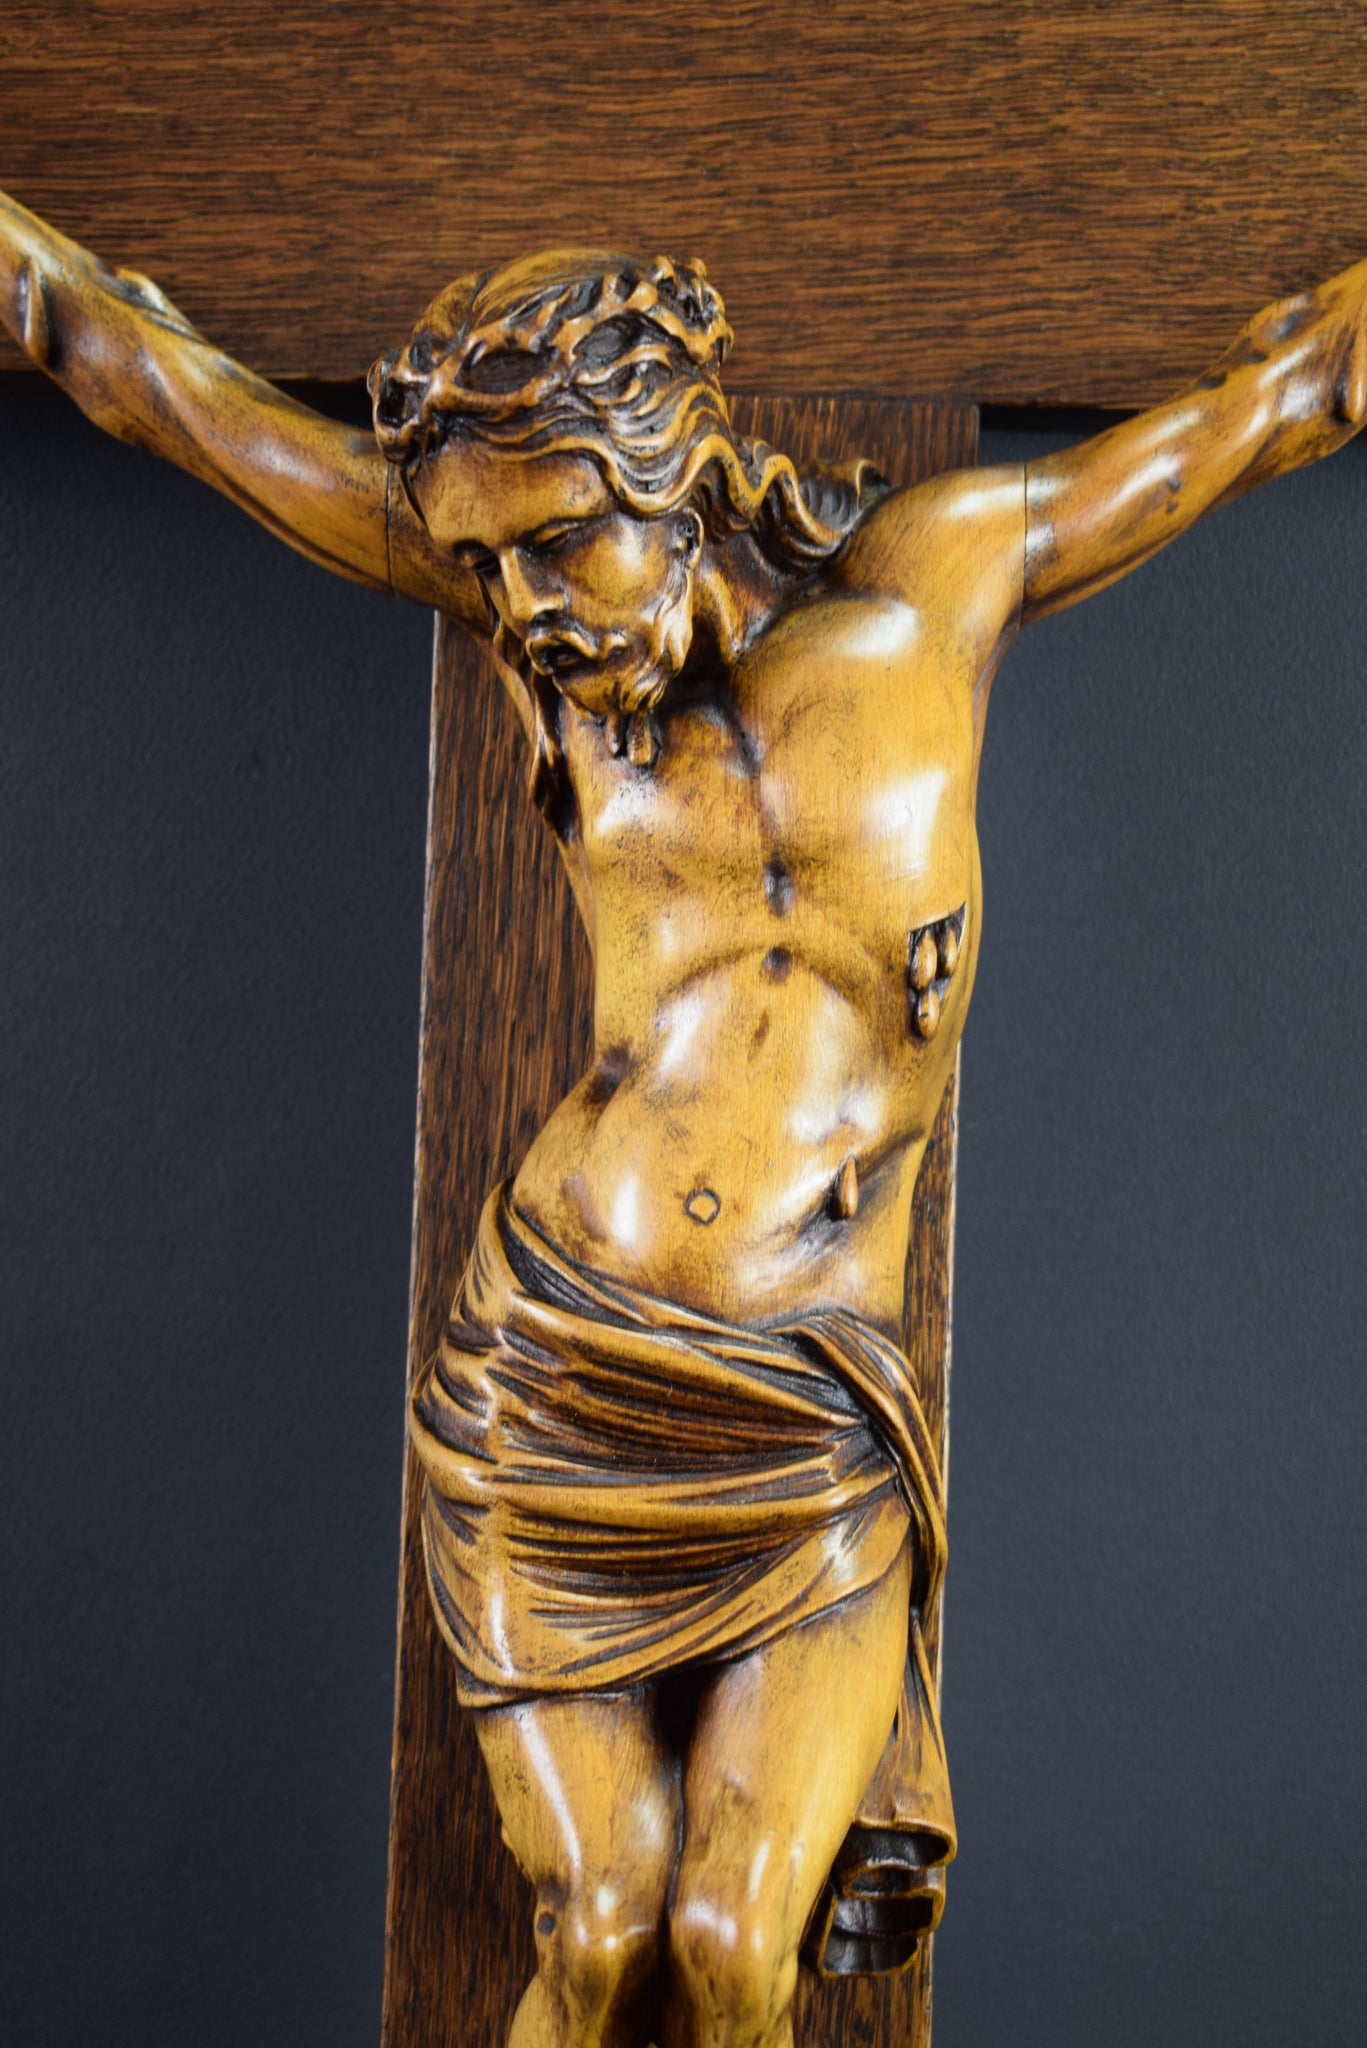 28" Carved Wood Wall Crucifix Cross